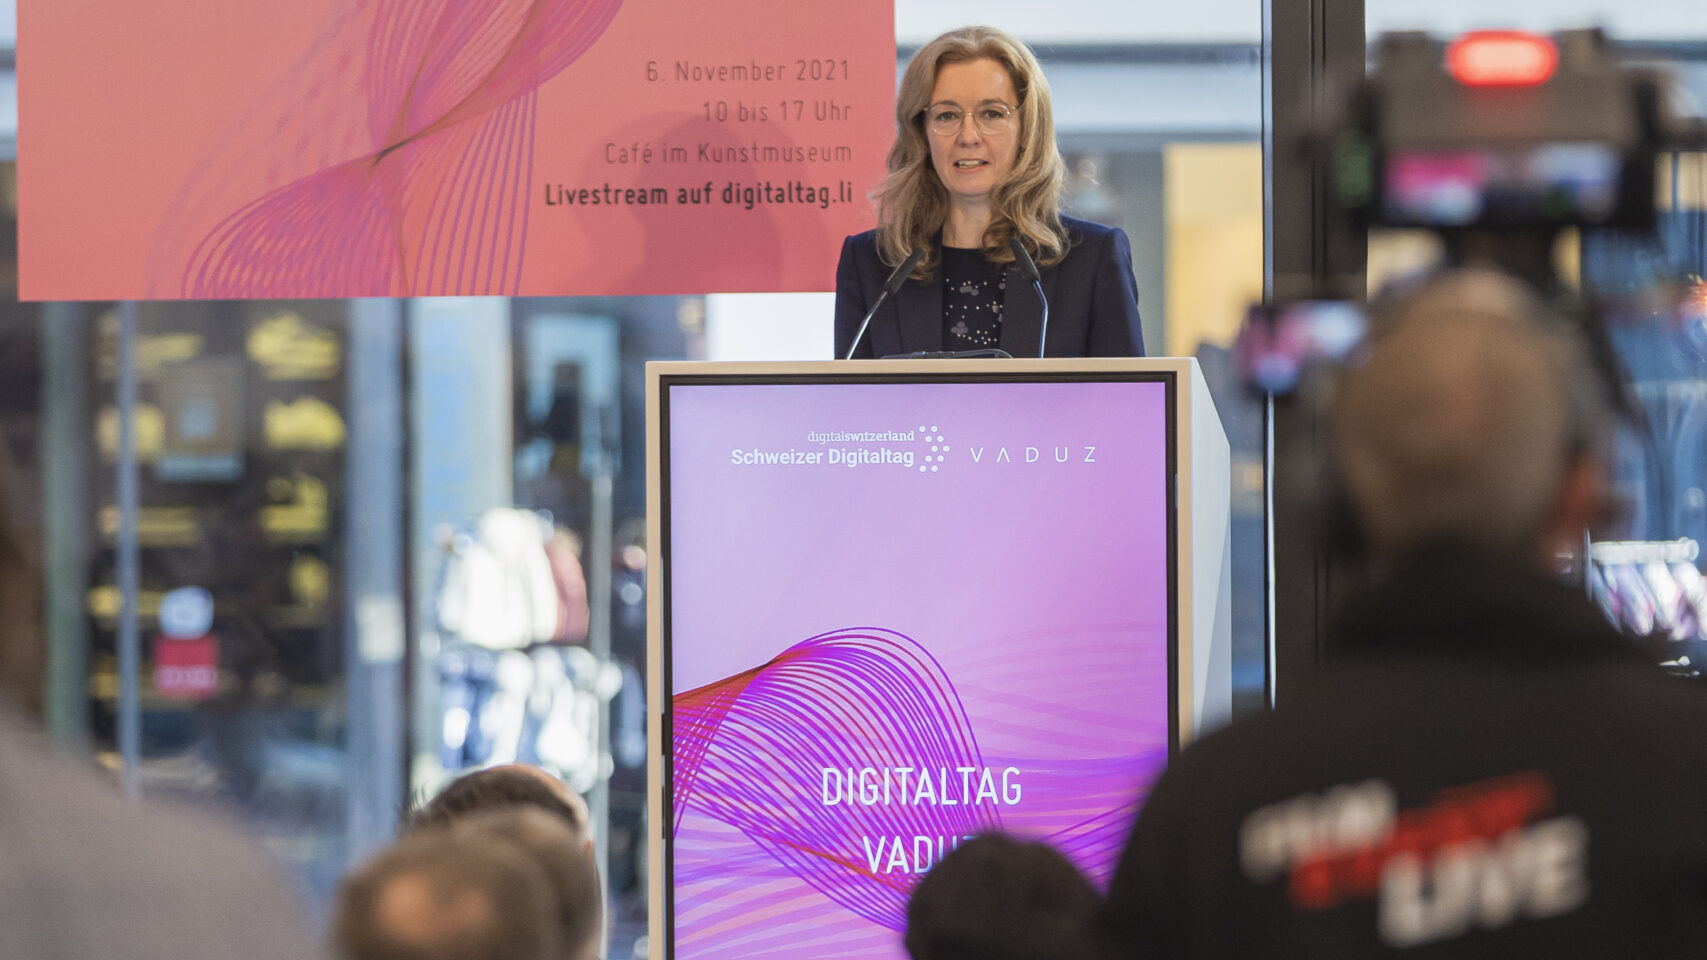 "Digitaltag Vaduz" ซึ่งต้อนรับโดย Kunstmuseum เมืองหลวงของราชรัฐลิกเตนสไตน์ในวันเสาร์ที่ 6 พฤศจิกายน 2021 กระตุ้นความกระตือรือร้นของประชาชนและผู้พูดโดยเปรียบเทียบกับ "Swiss Digital Day" ของวันรุ่งขึ้น 10: คำปราศรัยของรองนายกรัฐมนตรี Sabine Mounani